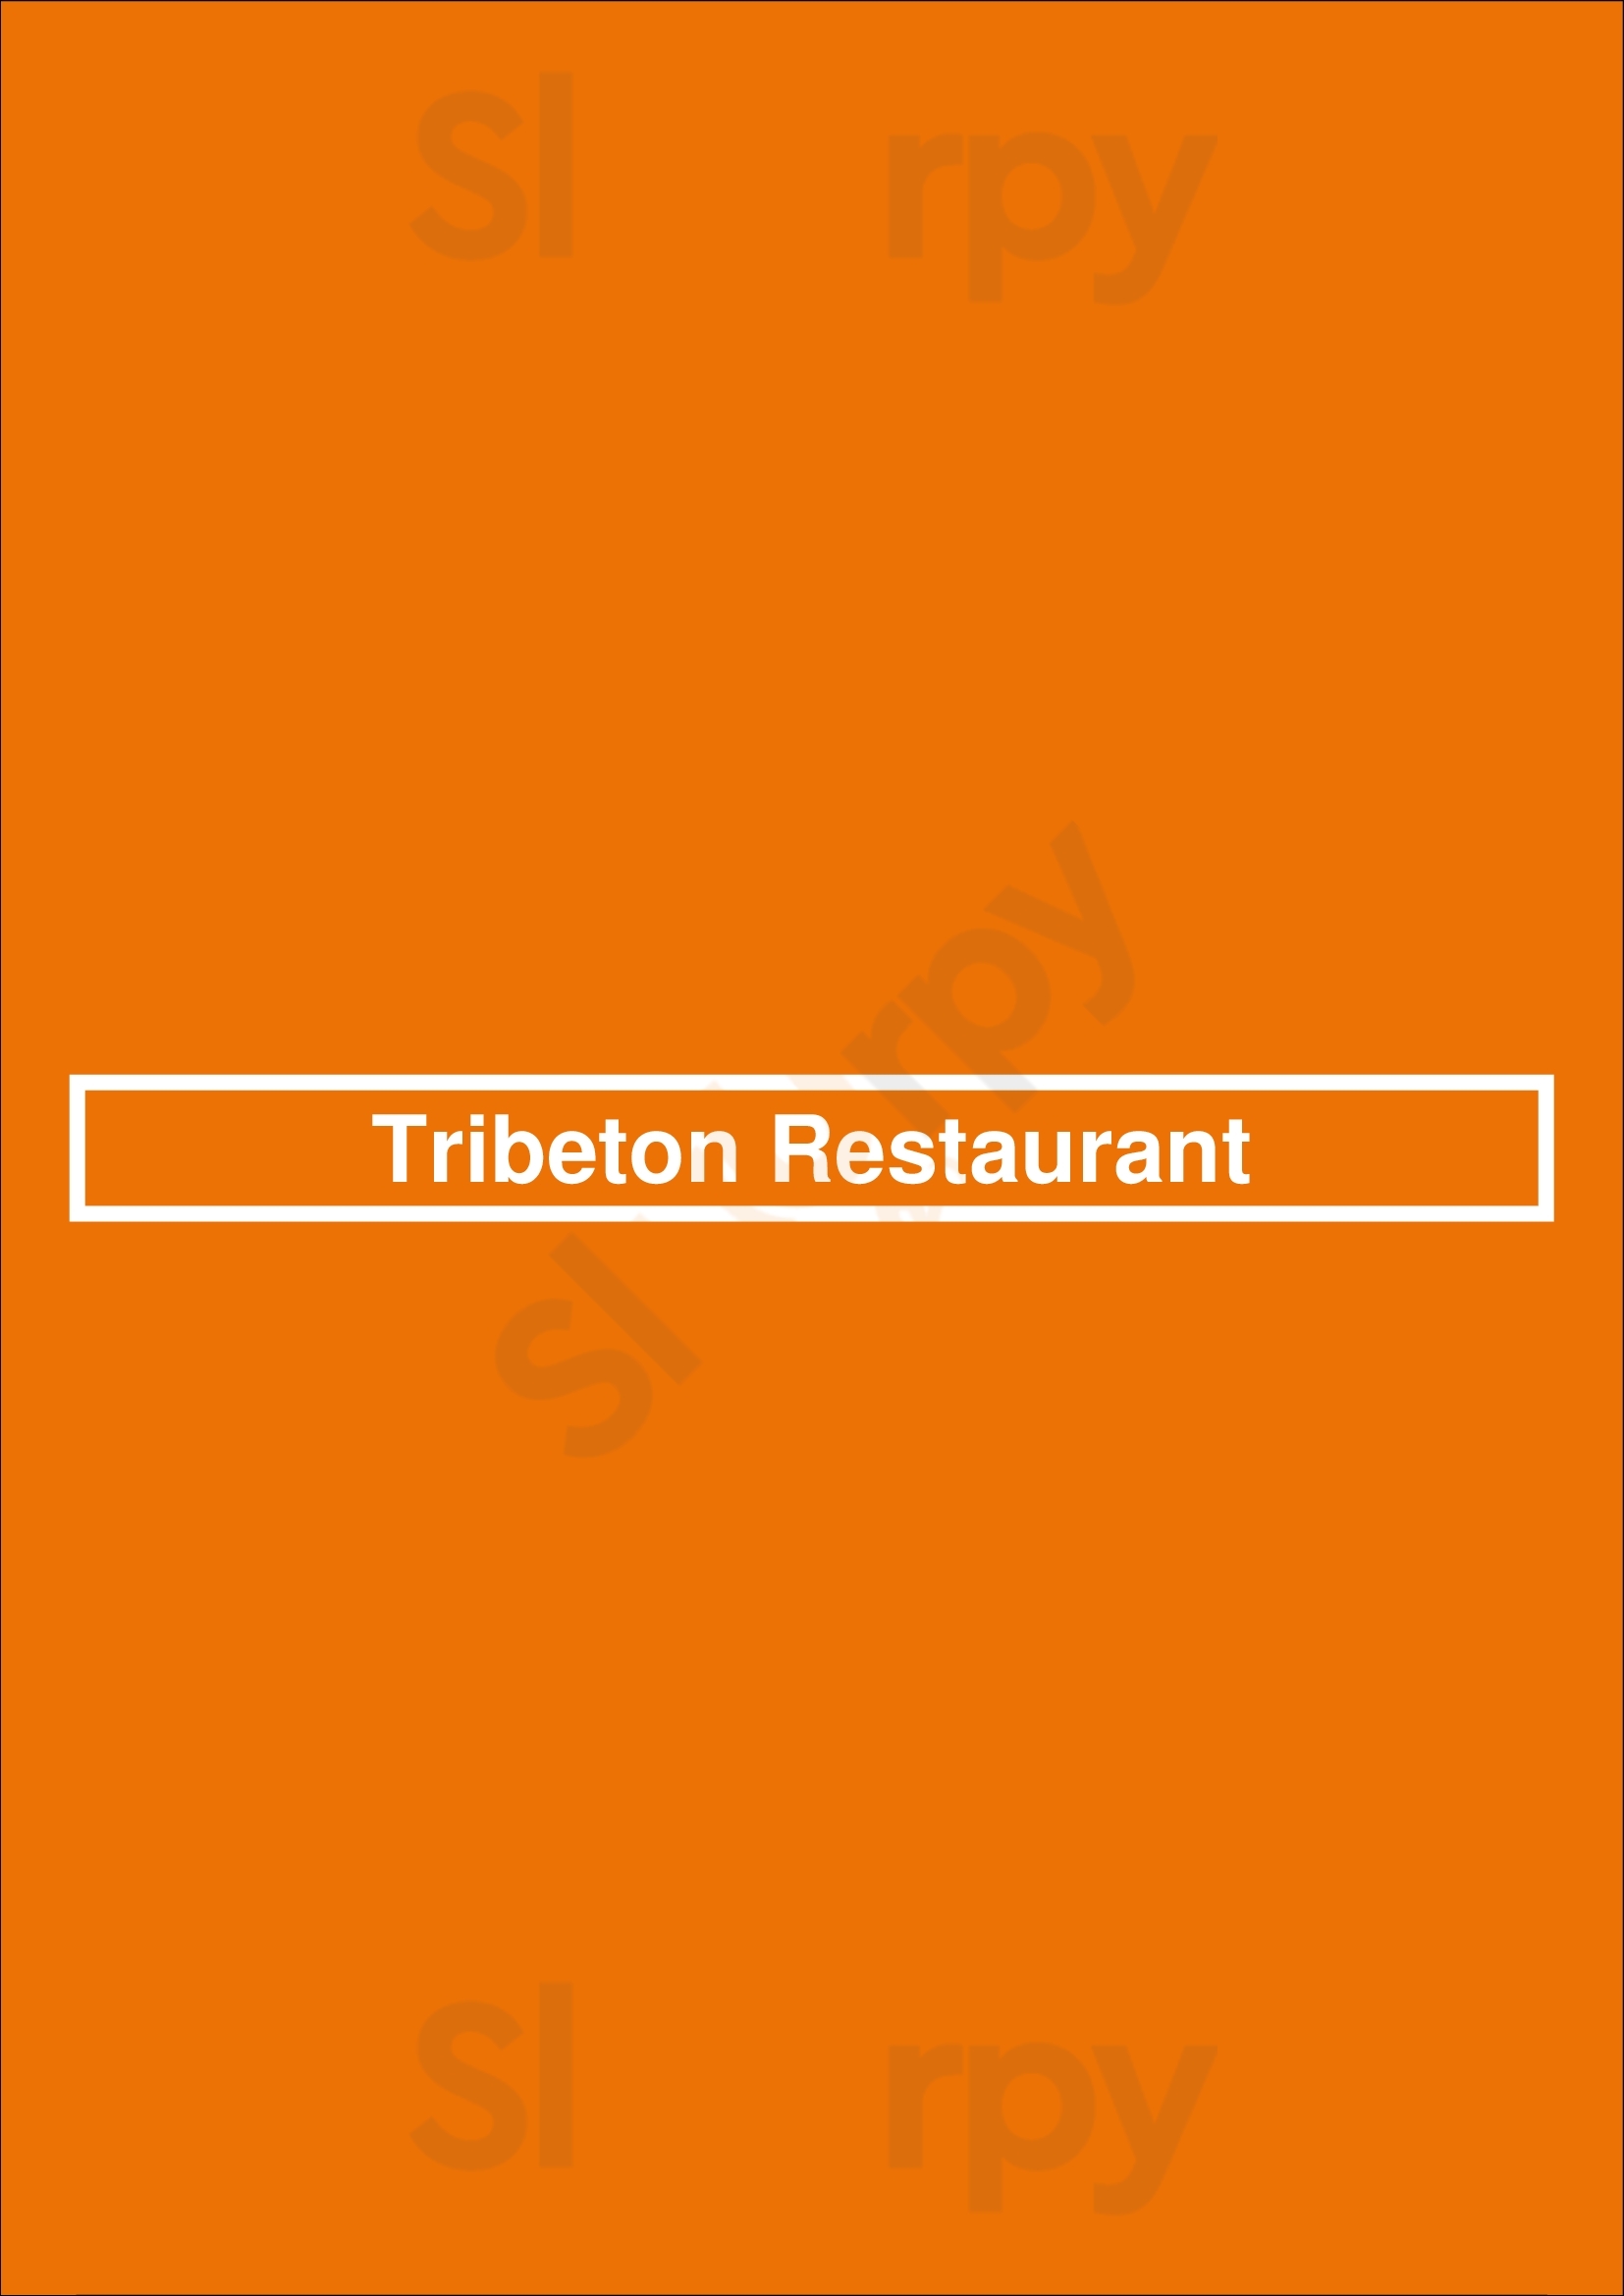 Tribeton Restaurant Galway Menu - 1